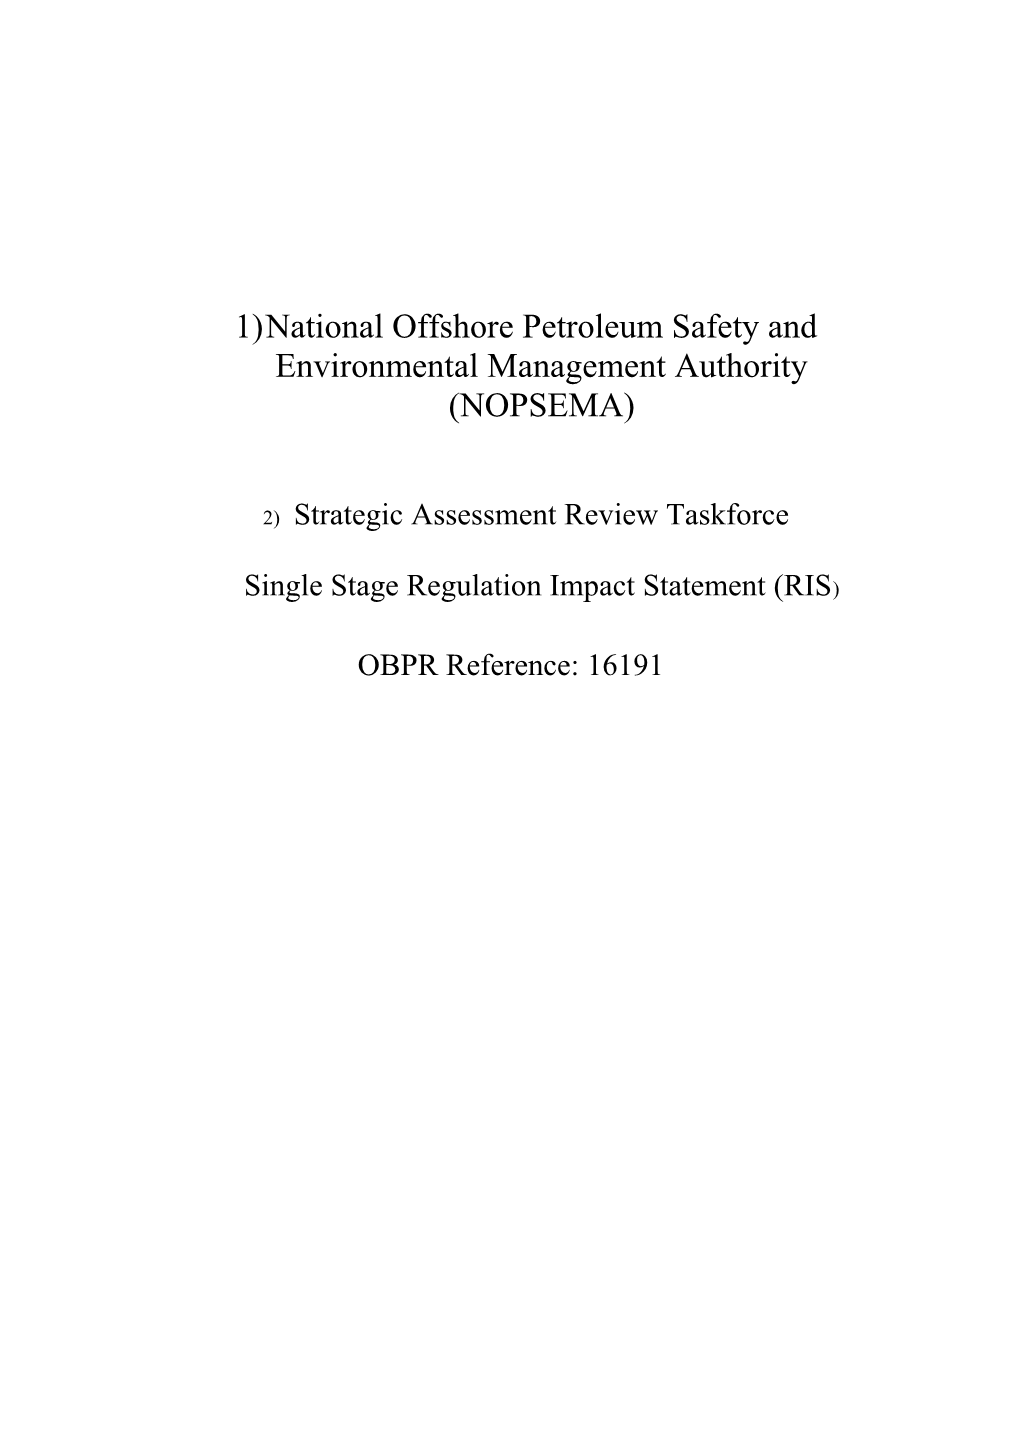 National Offshore Petroleum Safety and Environmental Management Authority (NOPSEMA)